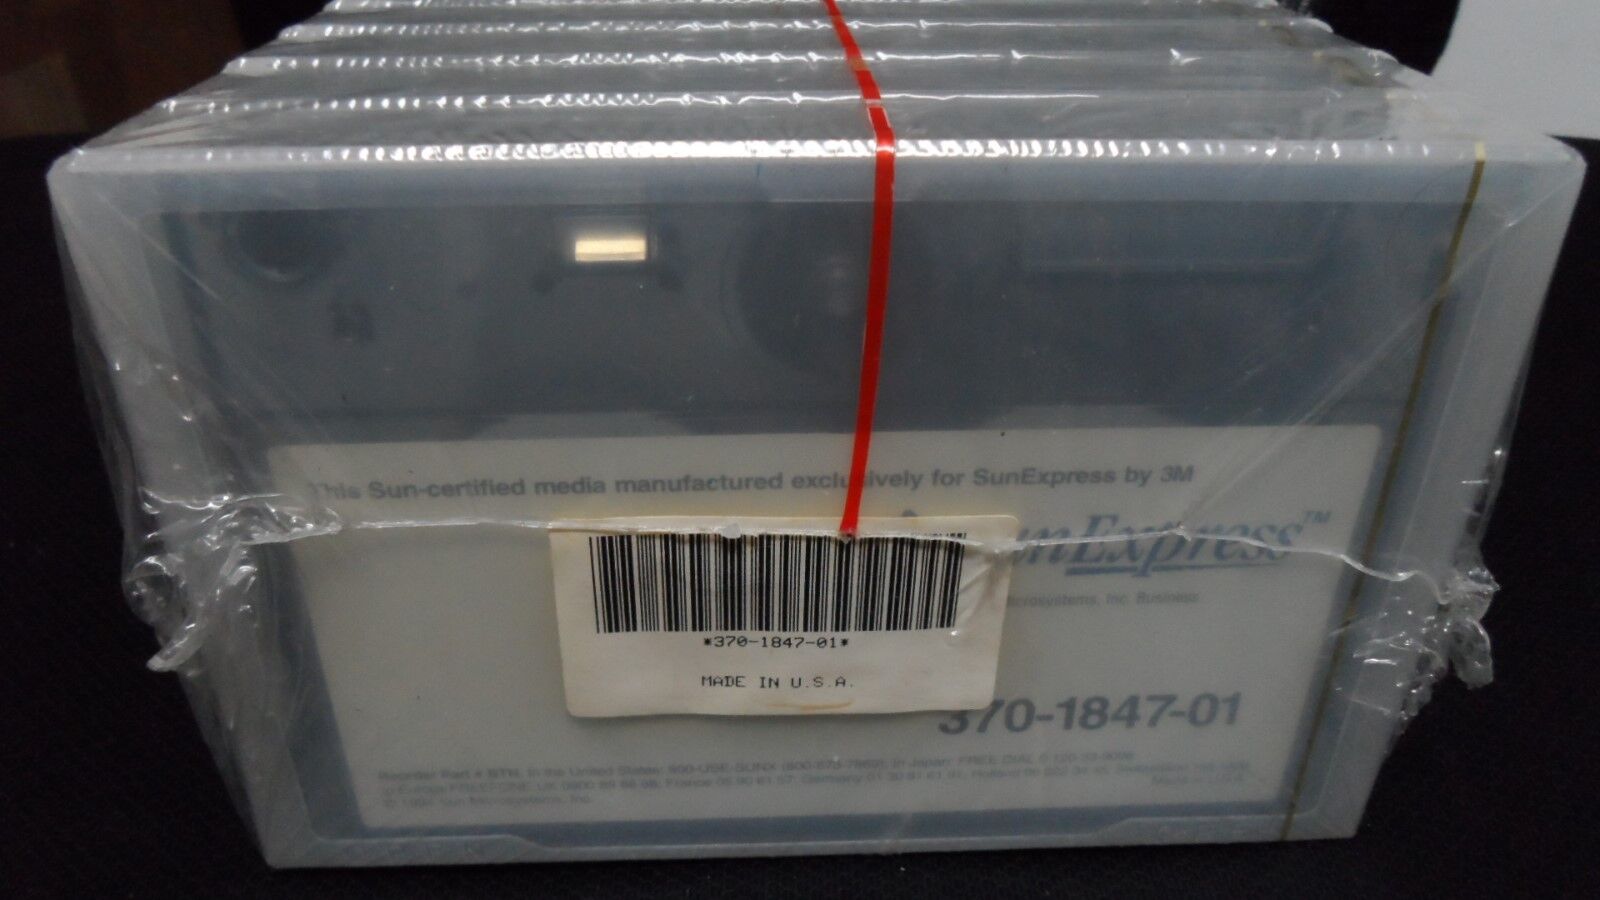 NEW  SUN SunExpress 3M DC6150 Data Tape Cartridge 370-1847-01 10Unit ONE LOT